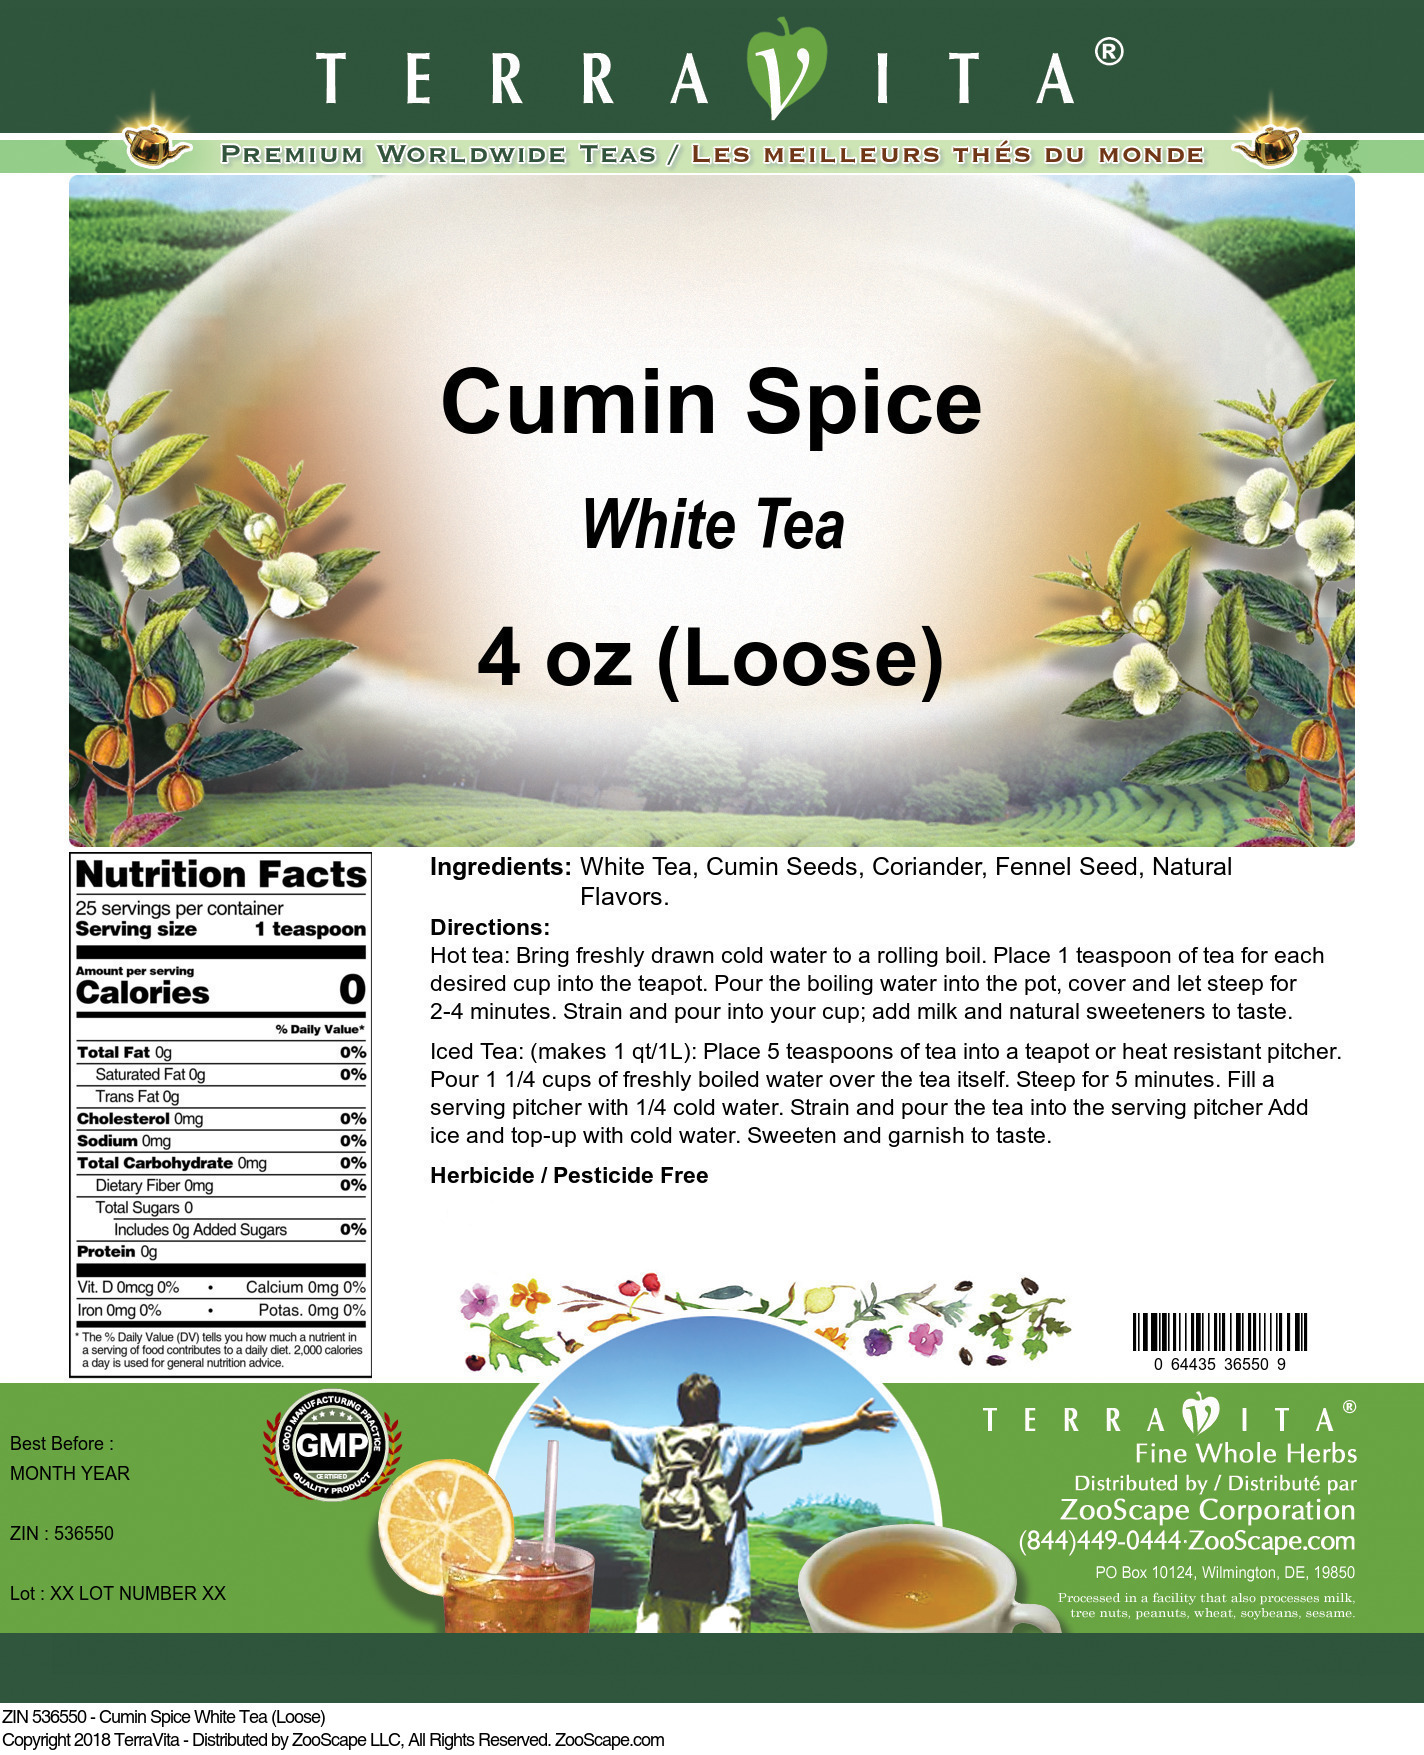 Cumin Spice White Tea (Loose) - Label